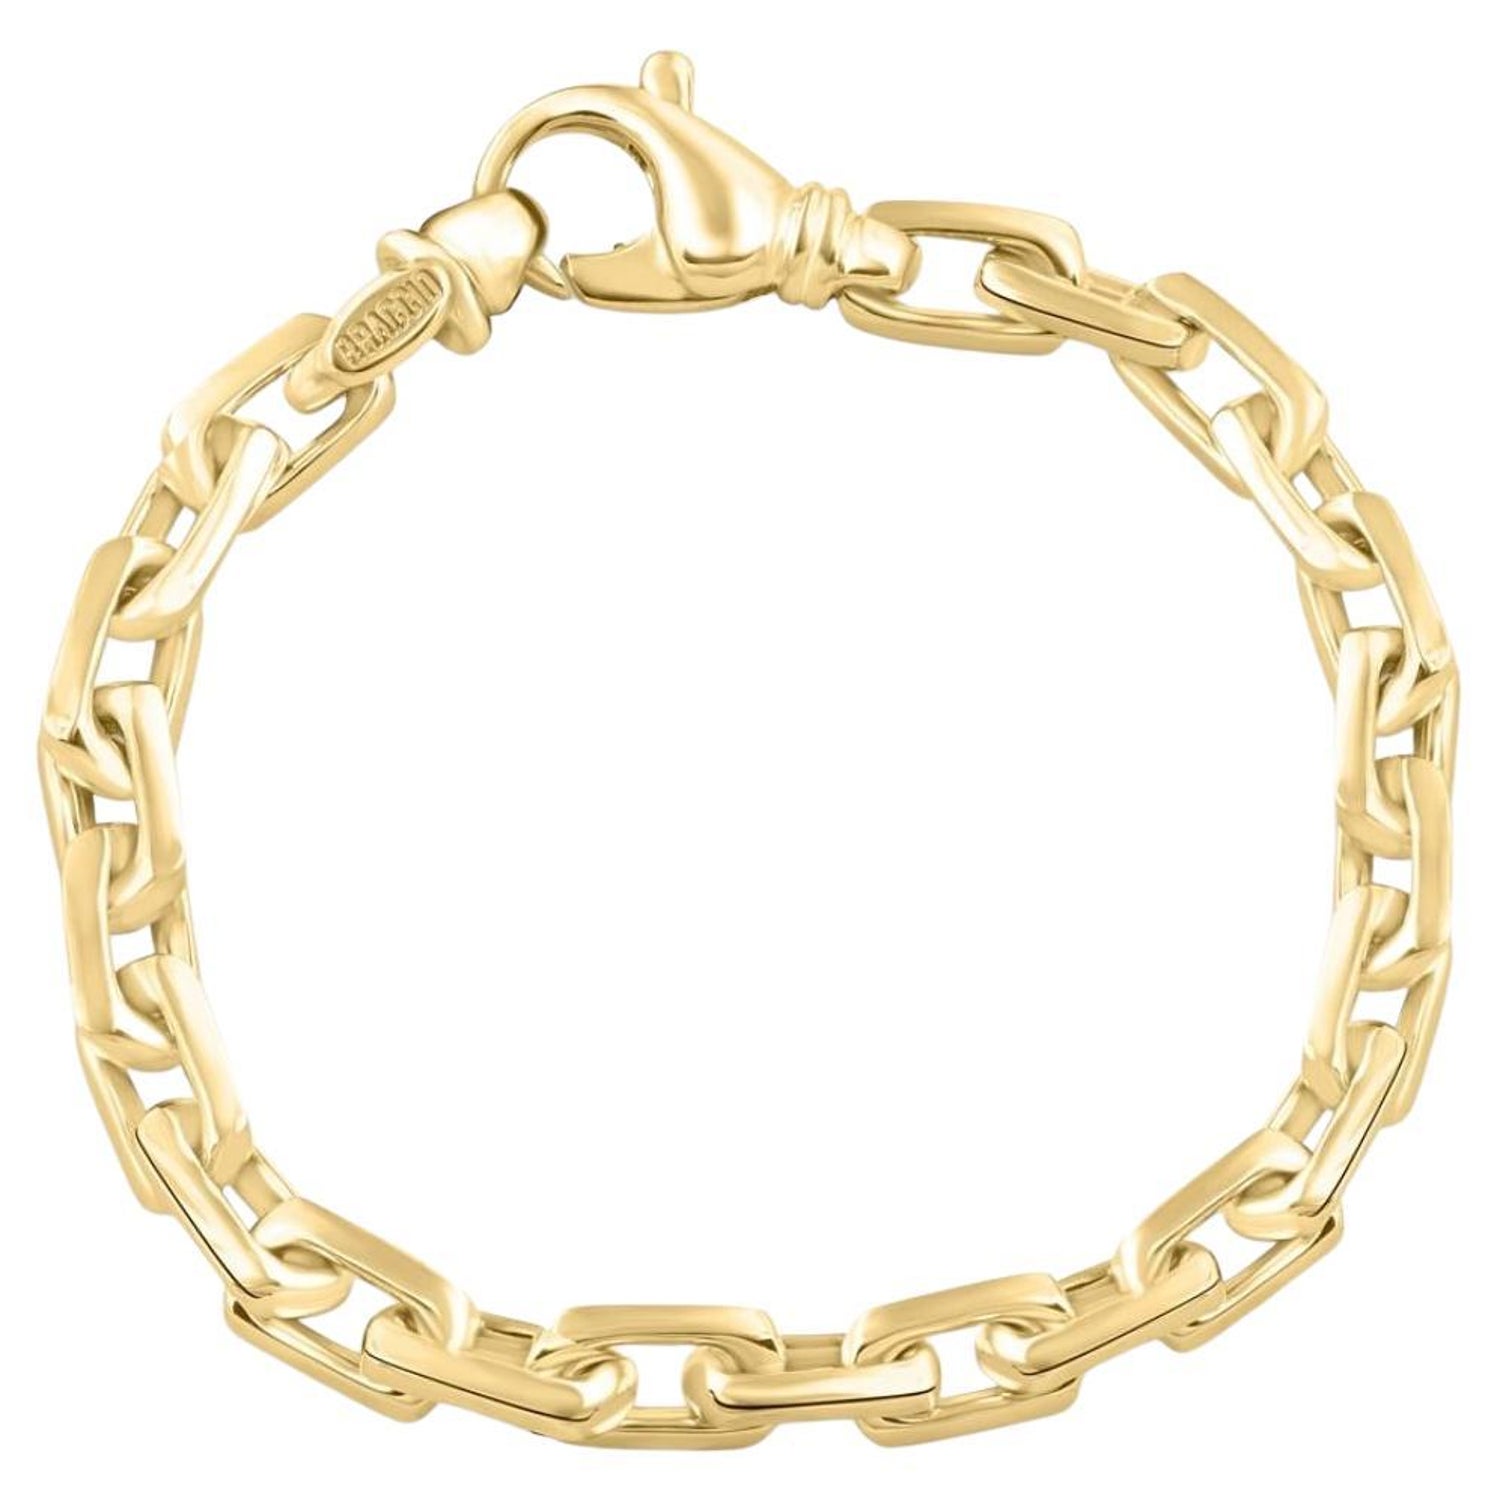 Silver Mariner Link Anchor Bracelet I Nautical Treasure Jewelry 8.5 Length / 6mm Width by Nautical Treasure Jewelry